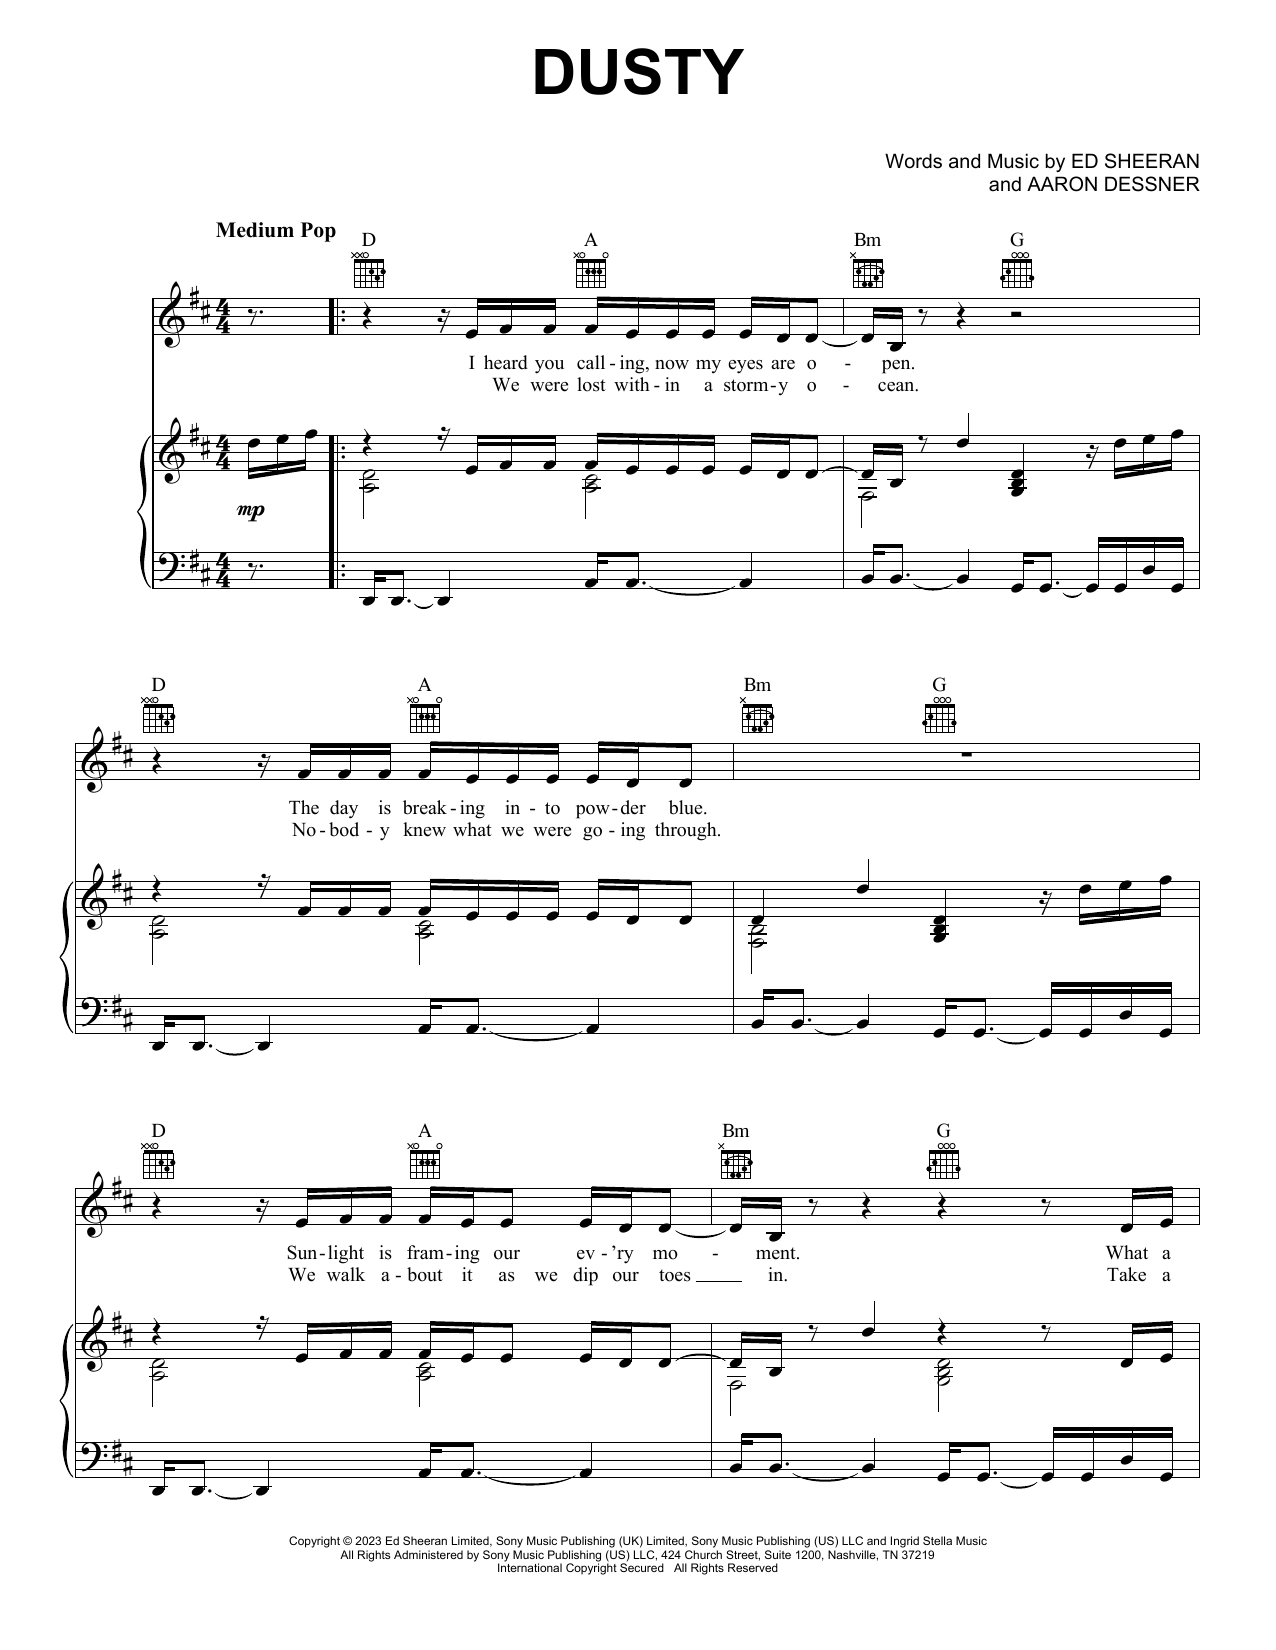 Ed Sheeran Dusty sheet music notes and chords. Download Printable PDF.